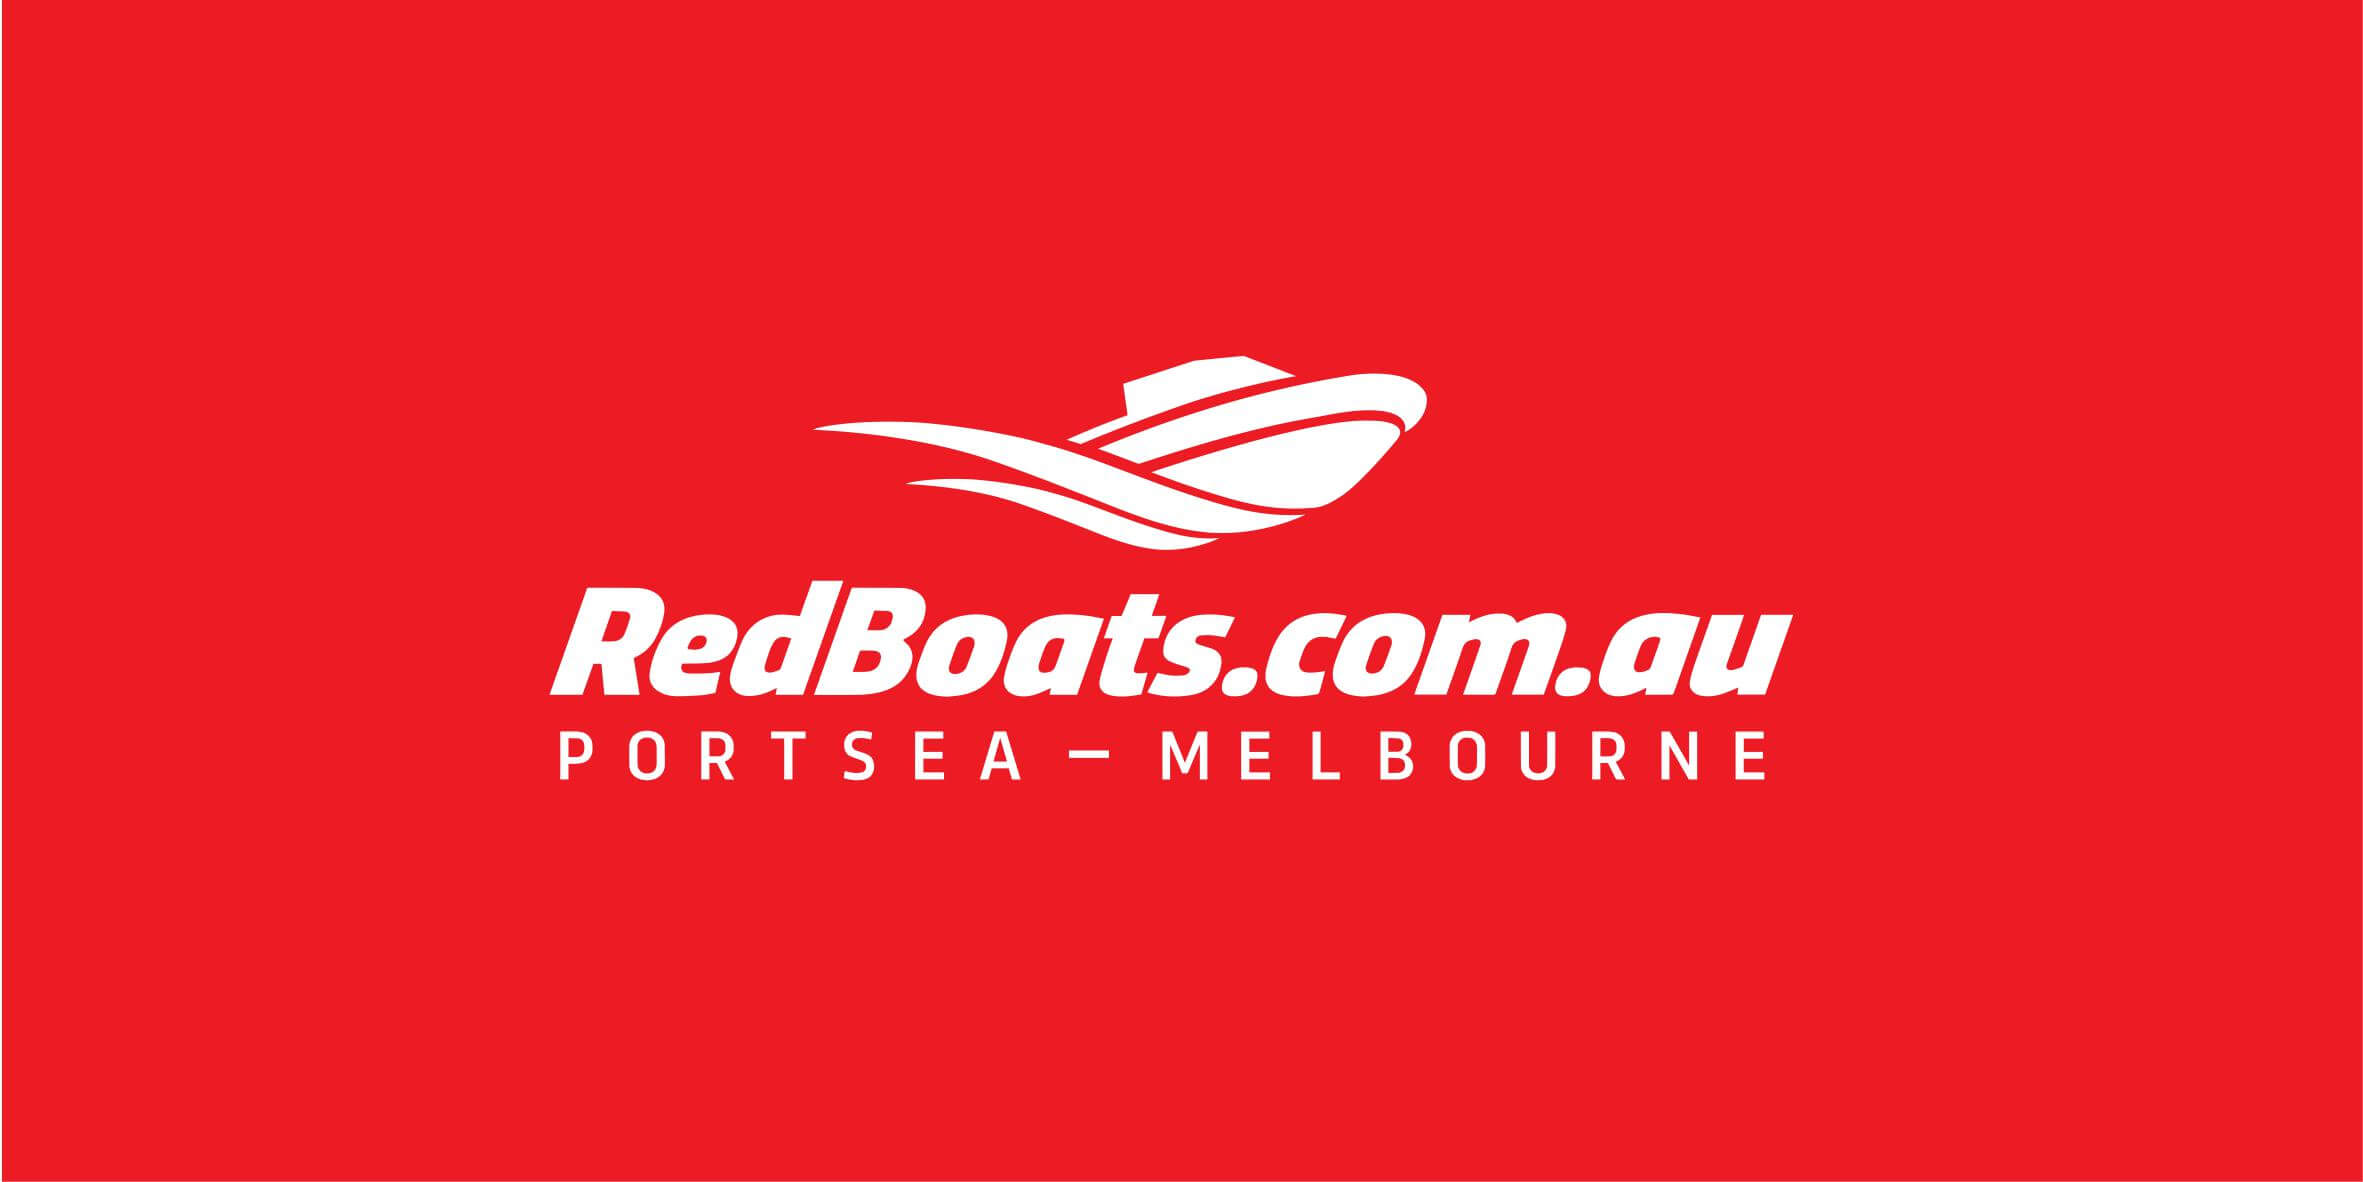 Red Boats PortSea Melbourne